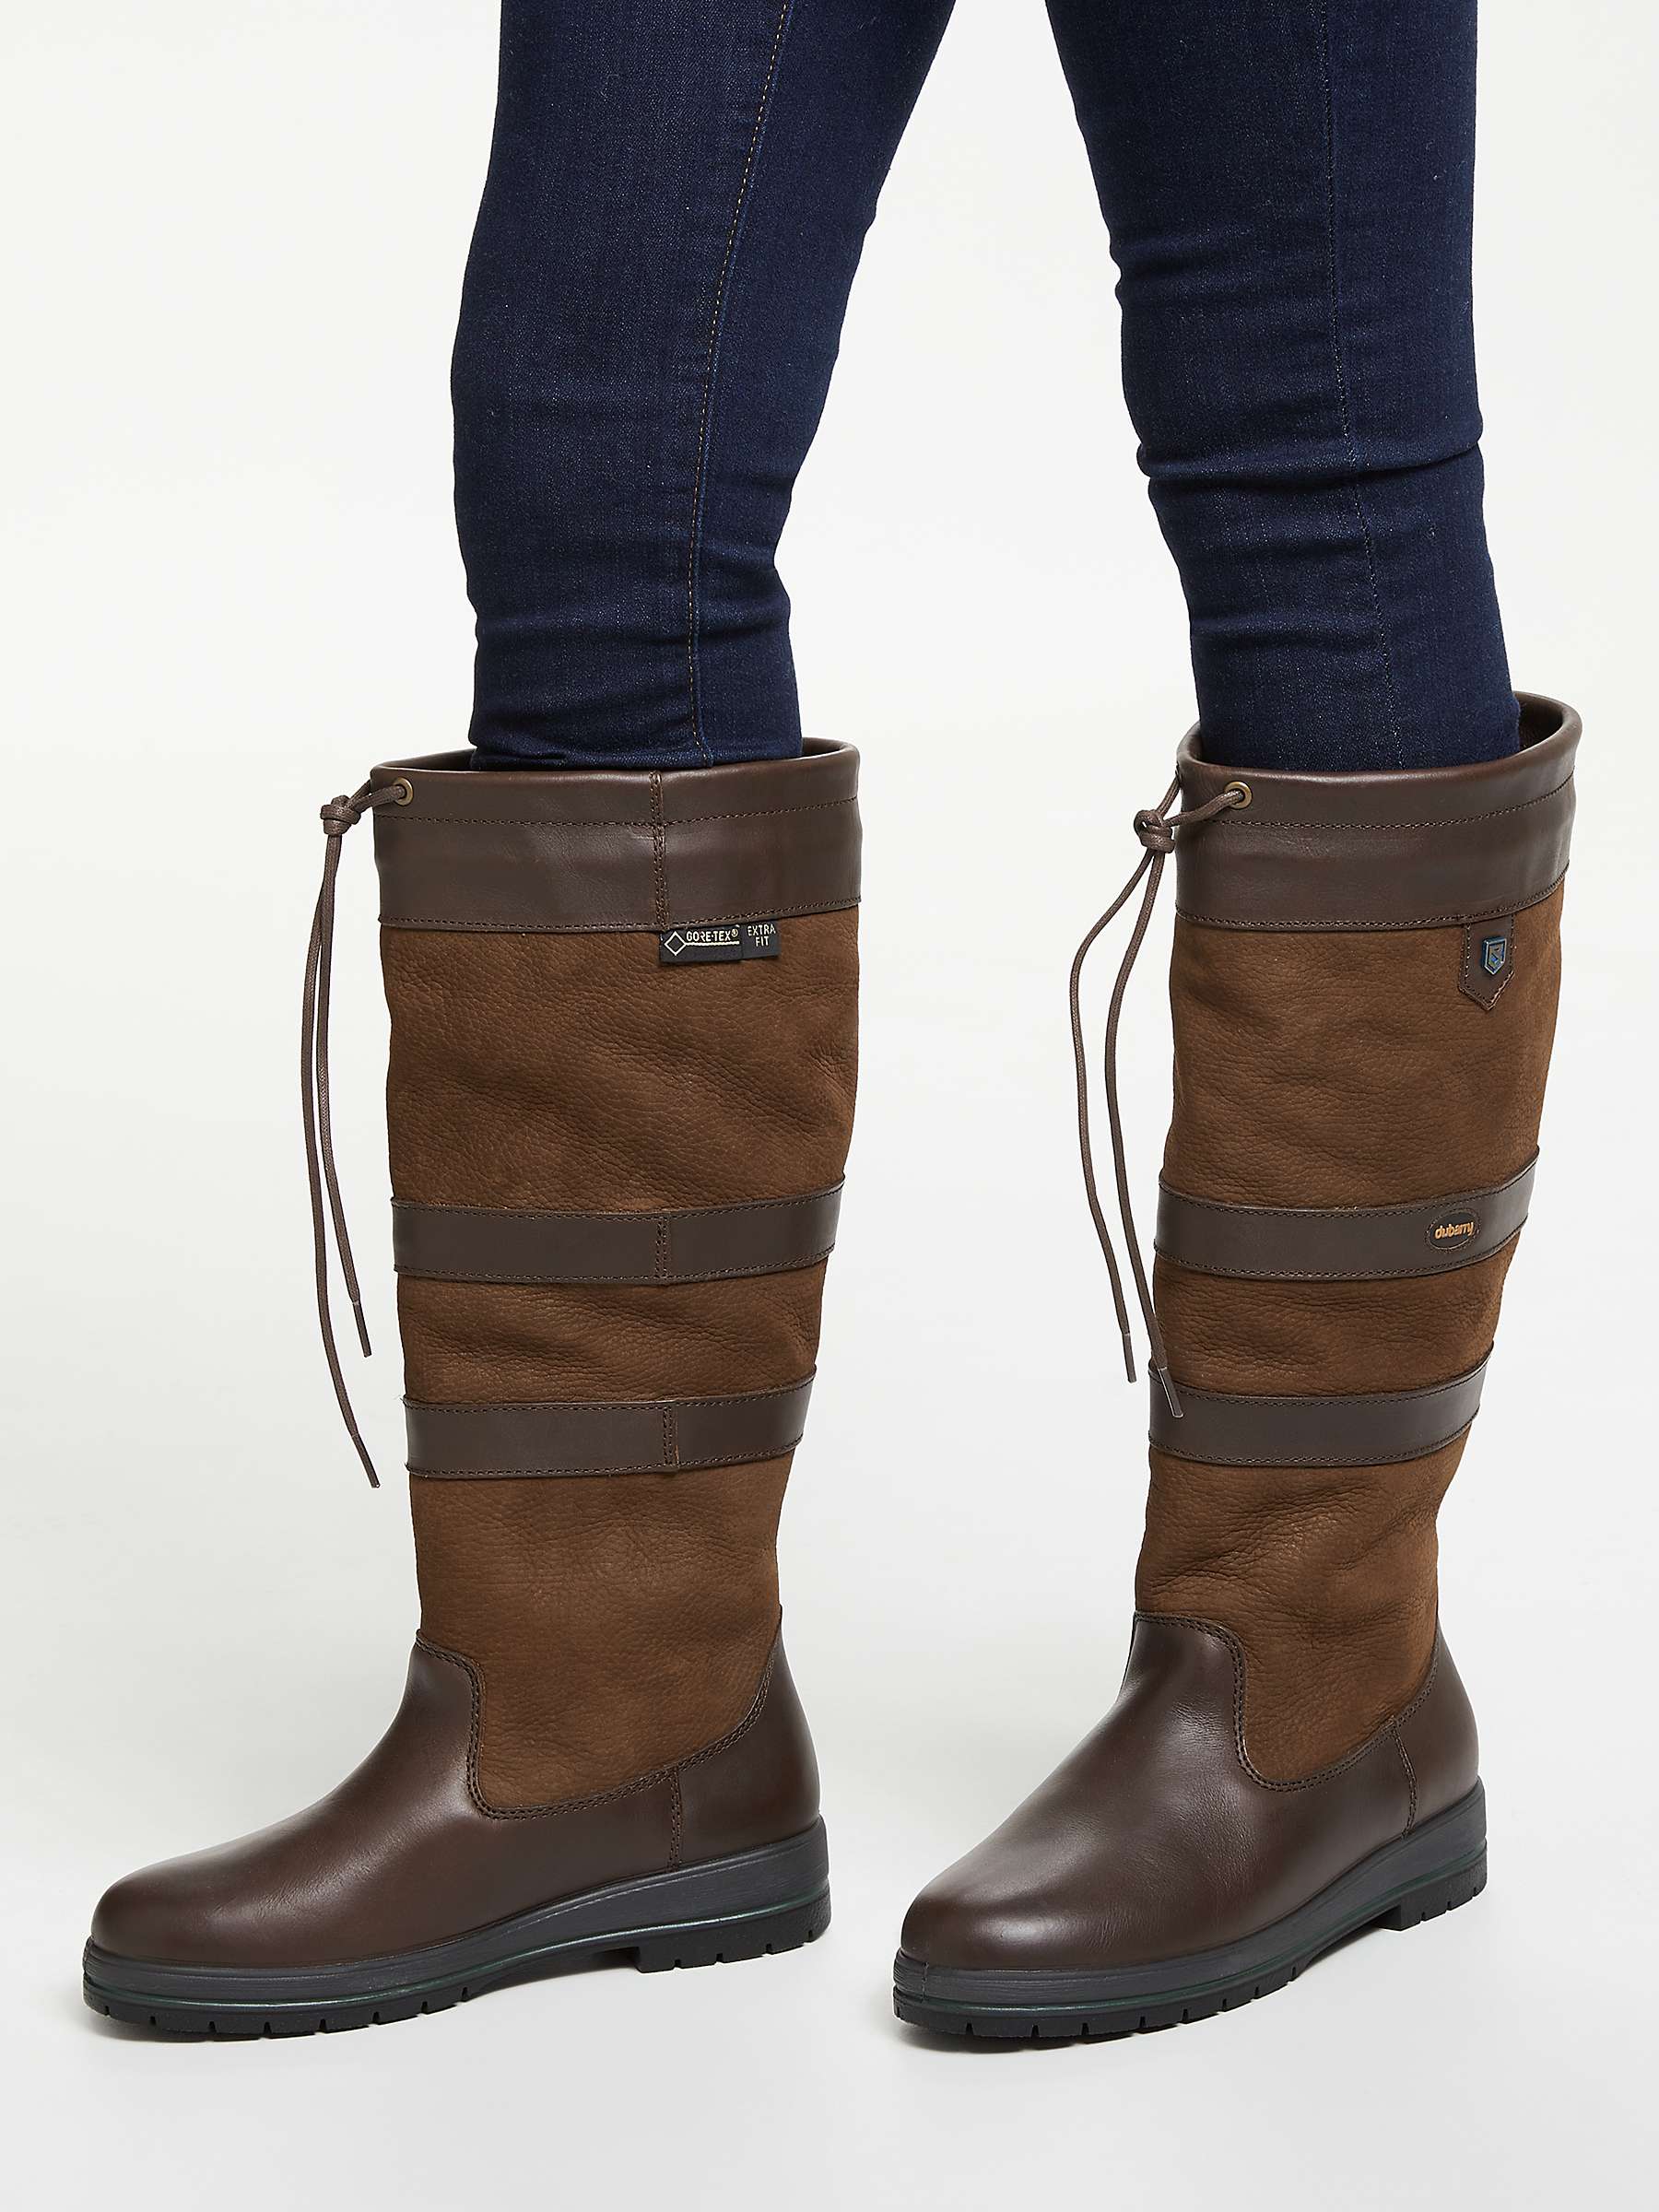 Buy Dubarry Galway Gortex Wide Calf Waterproof Knee High Boots, Walnut Leather Online at johnlewis.com